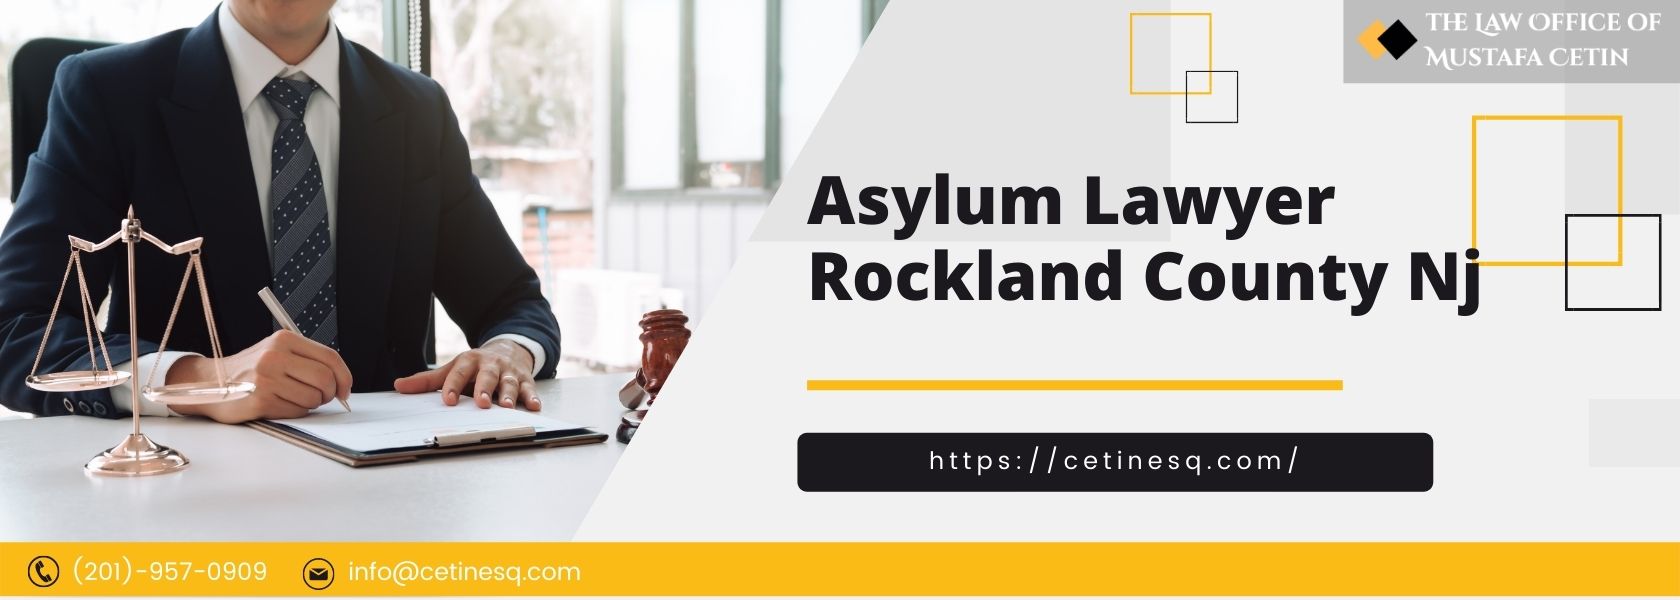 Asylum Lawyer Rockland County Nj - How to apply for asylum ?